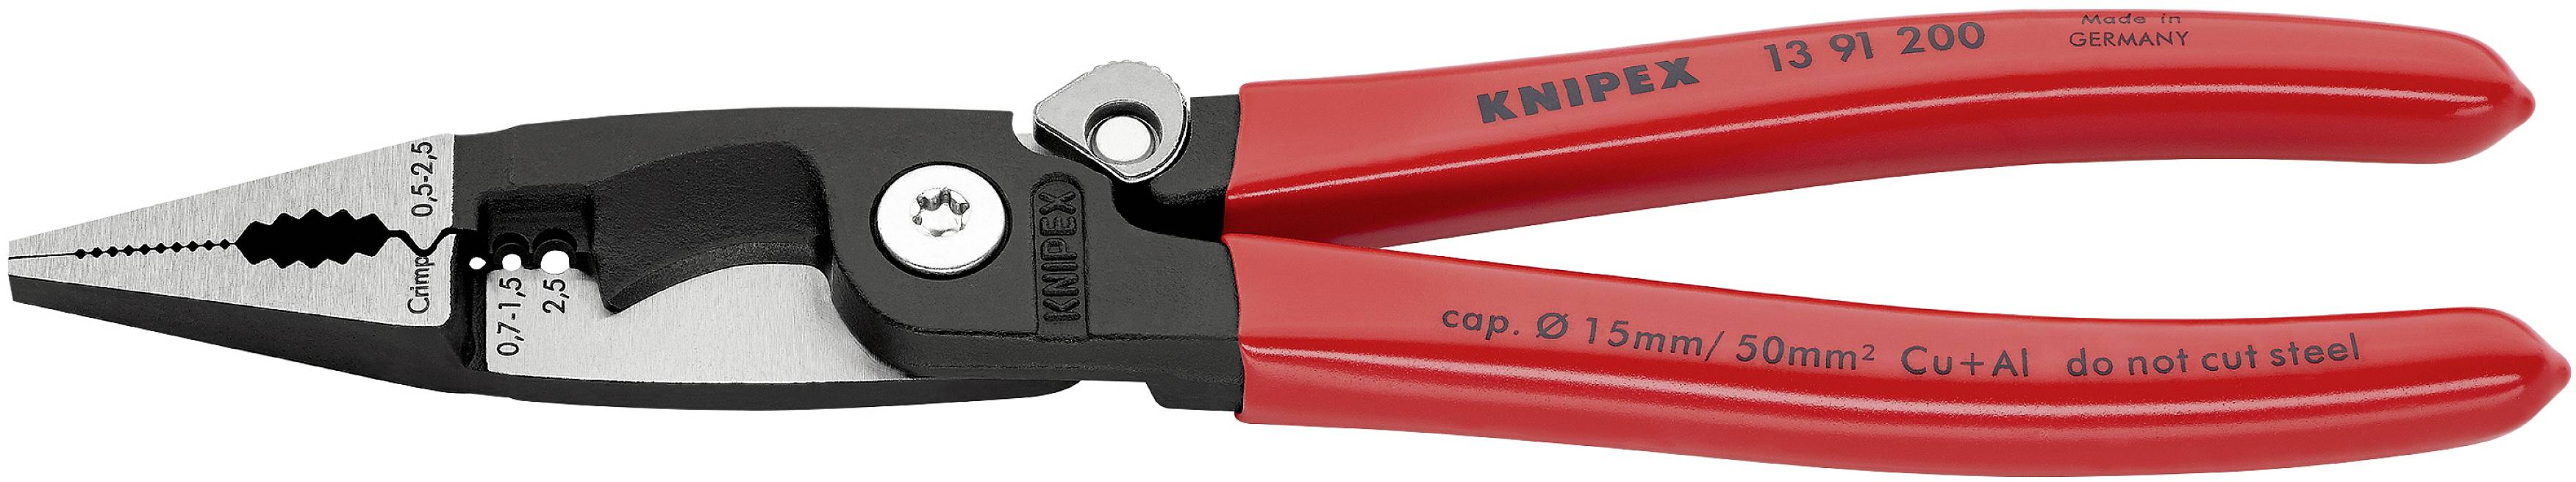 KNIPEX Elektro-Installationszange 13 91 200 (13 91 200)